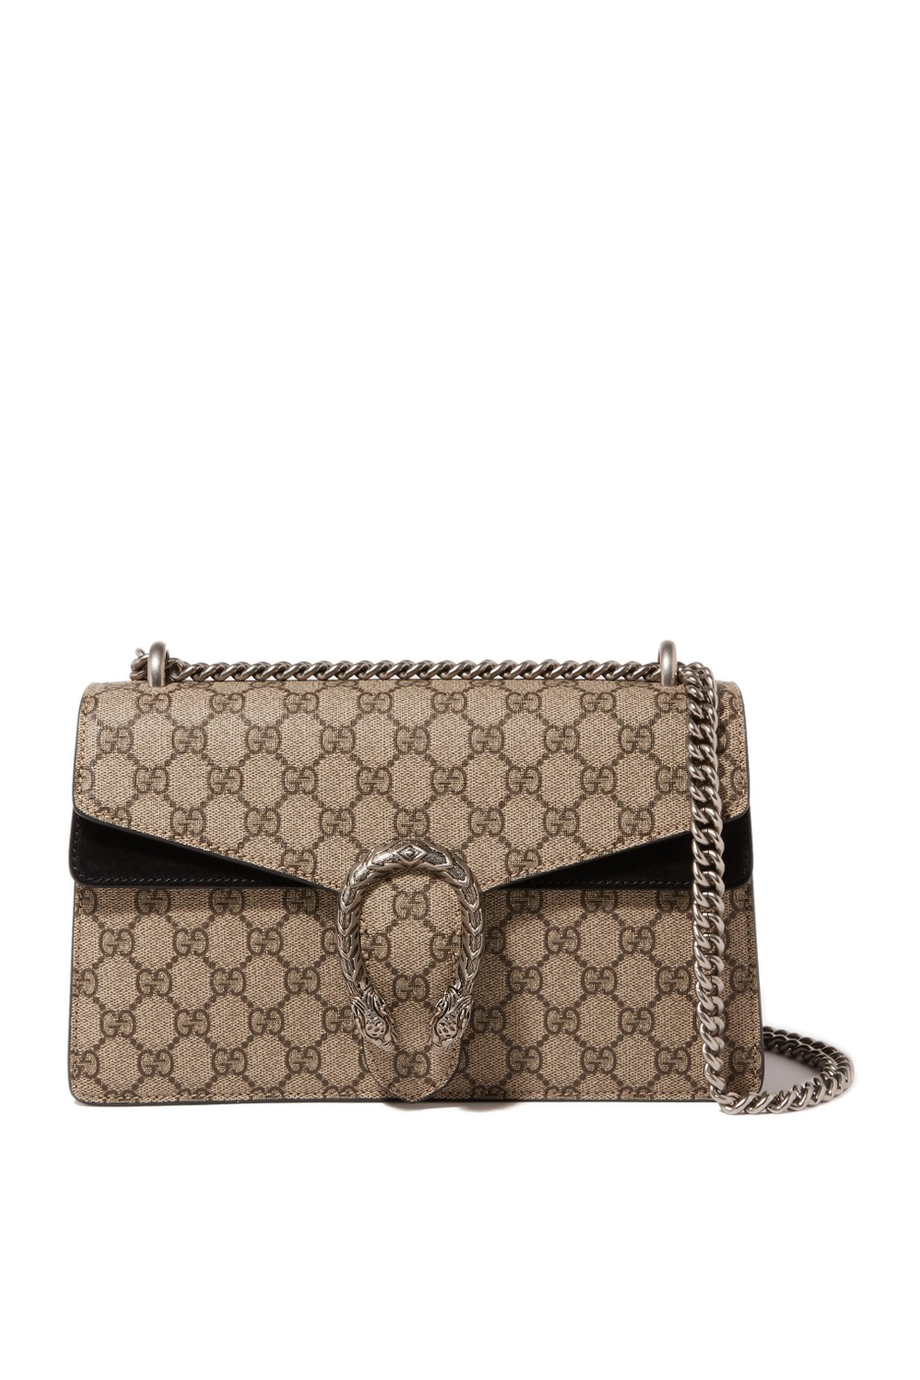 Buy Gucci Dionysus GG Shoulder Bag for Womens | Bloomingdale's Kuwait